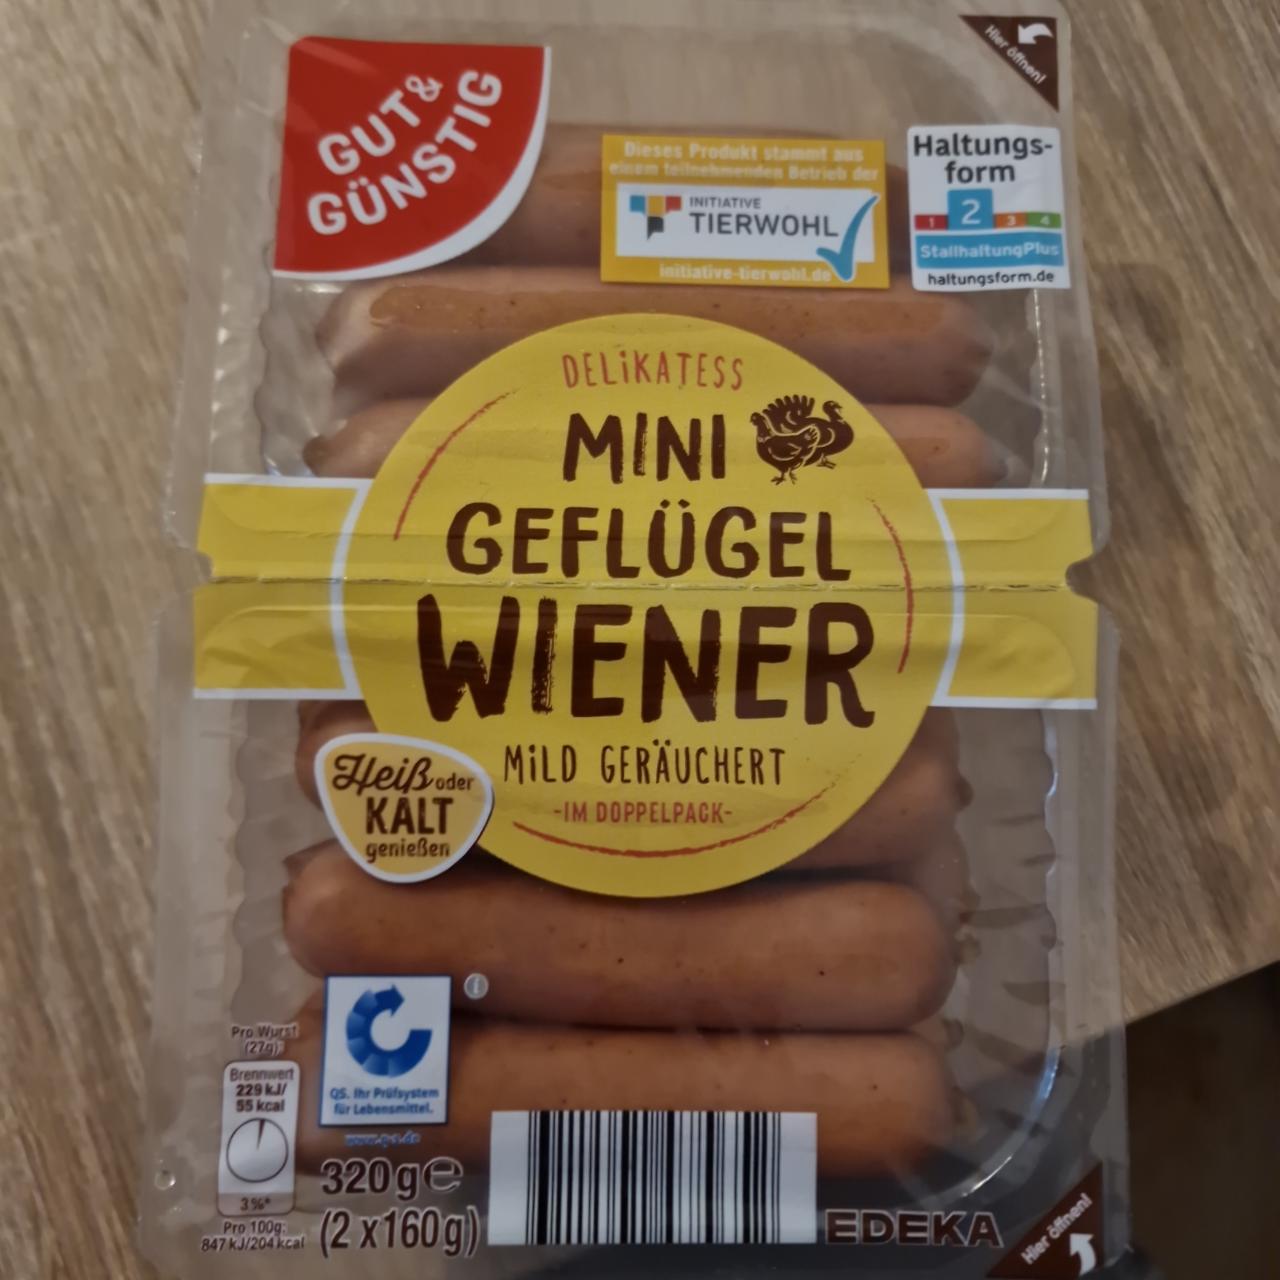 Delikatess Mini geflügel a hodnoty - nutričné Gut&Günstig kalórie, kJ wiener